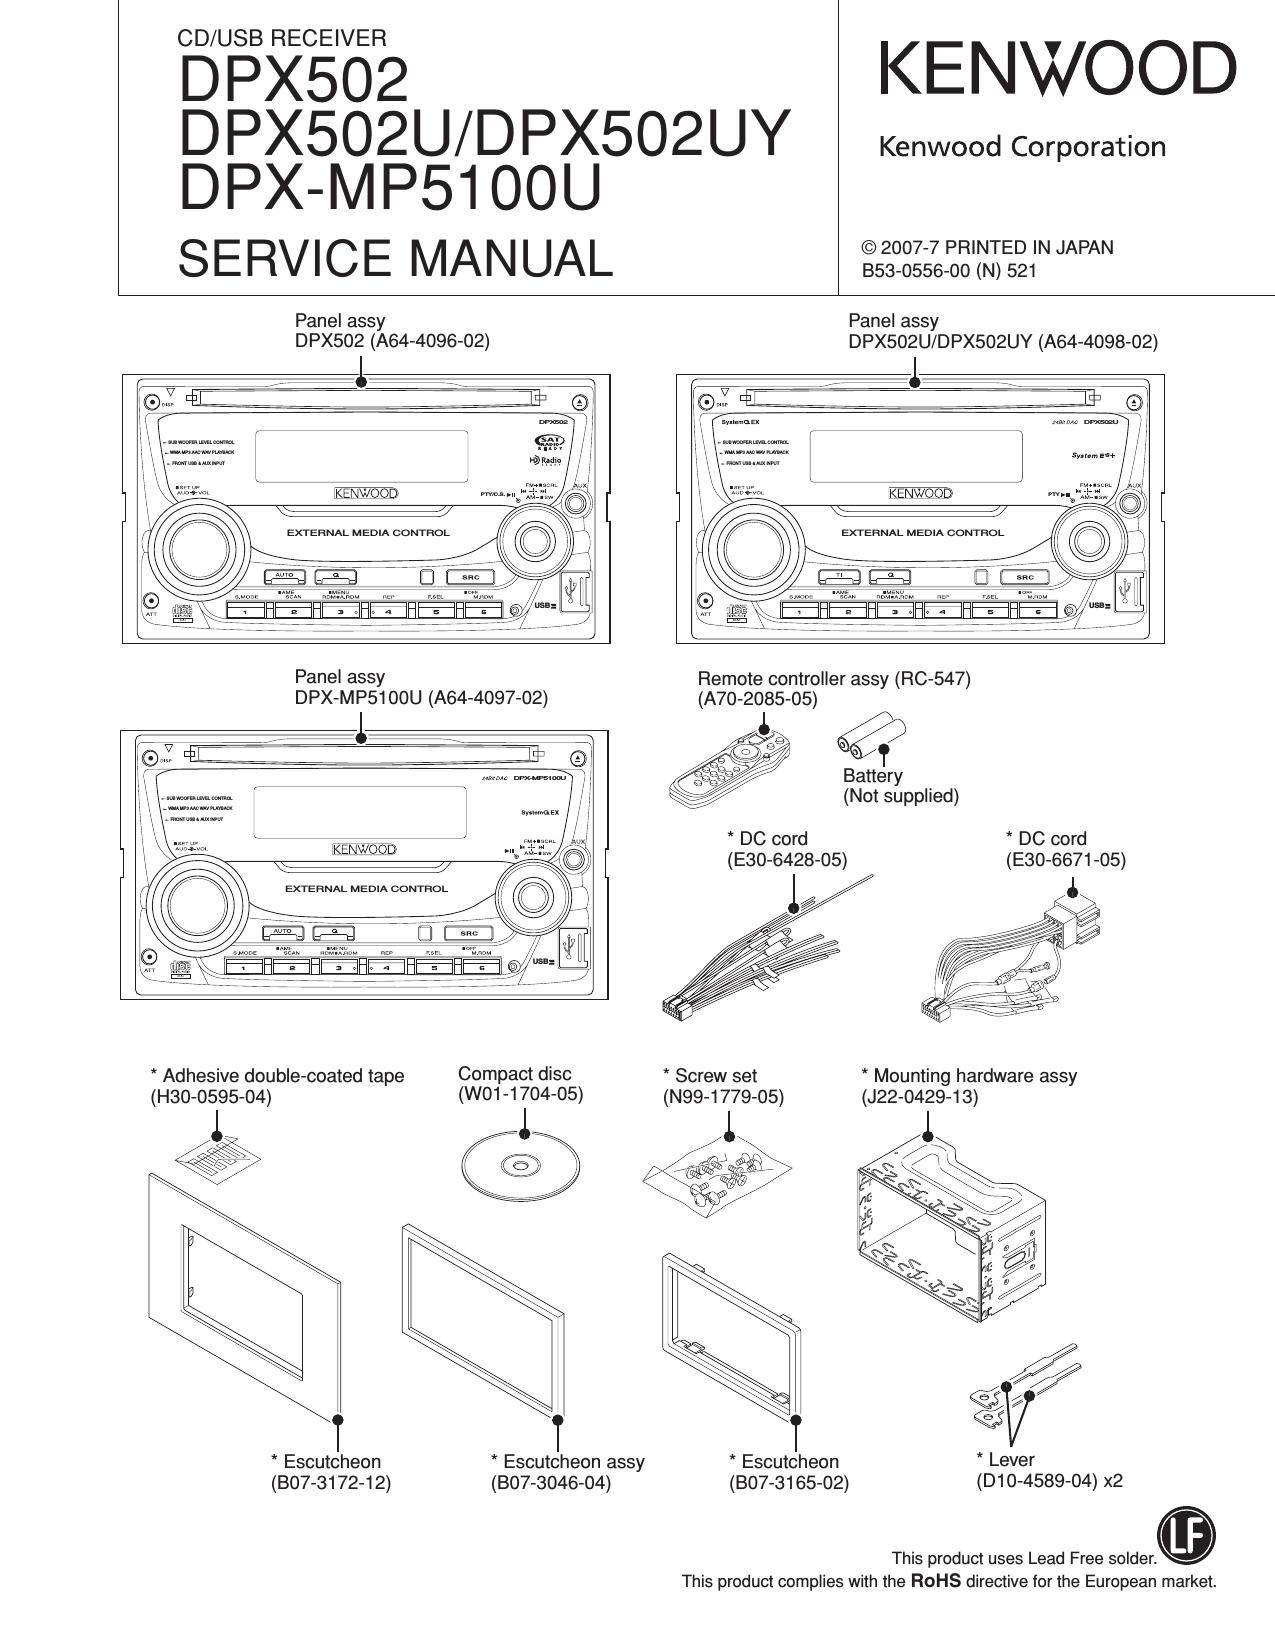 Kenwood DPX 502 Service Manual